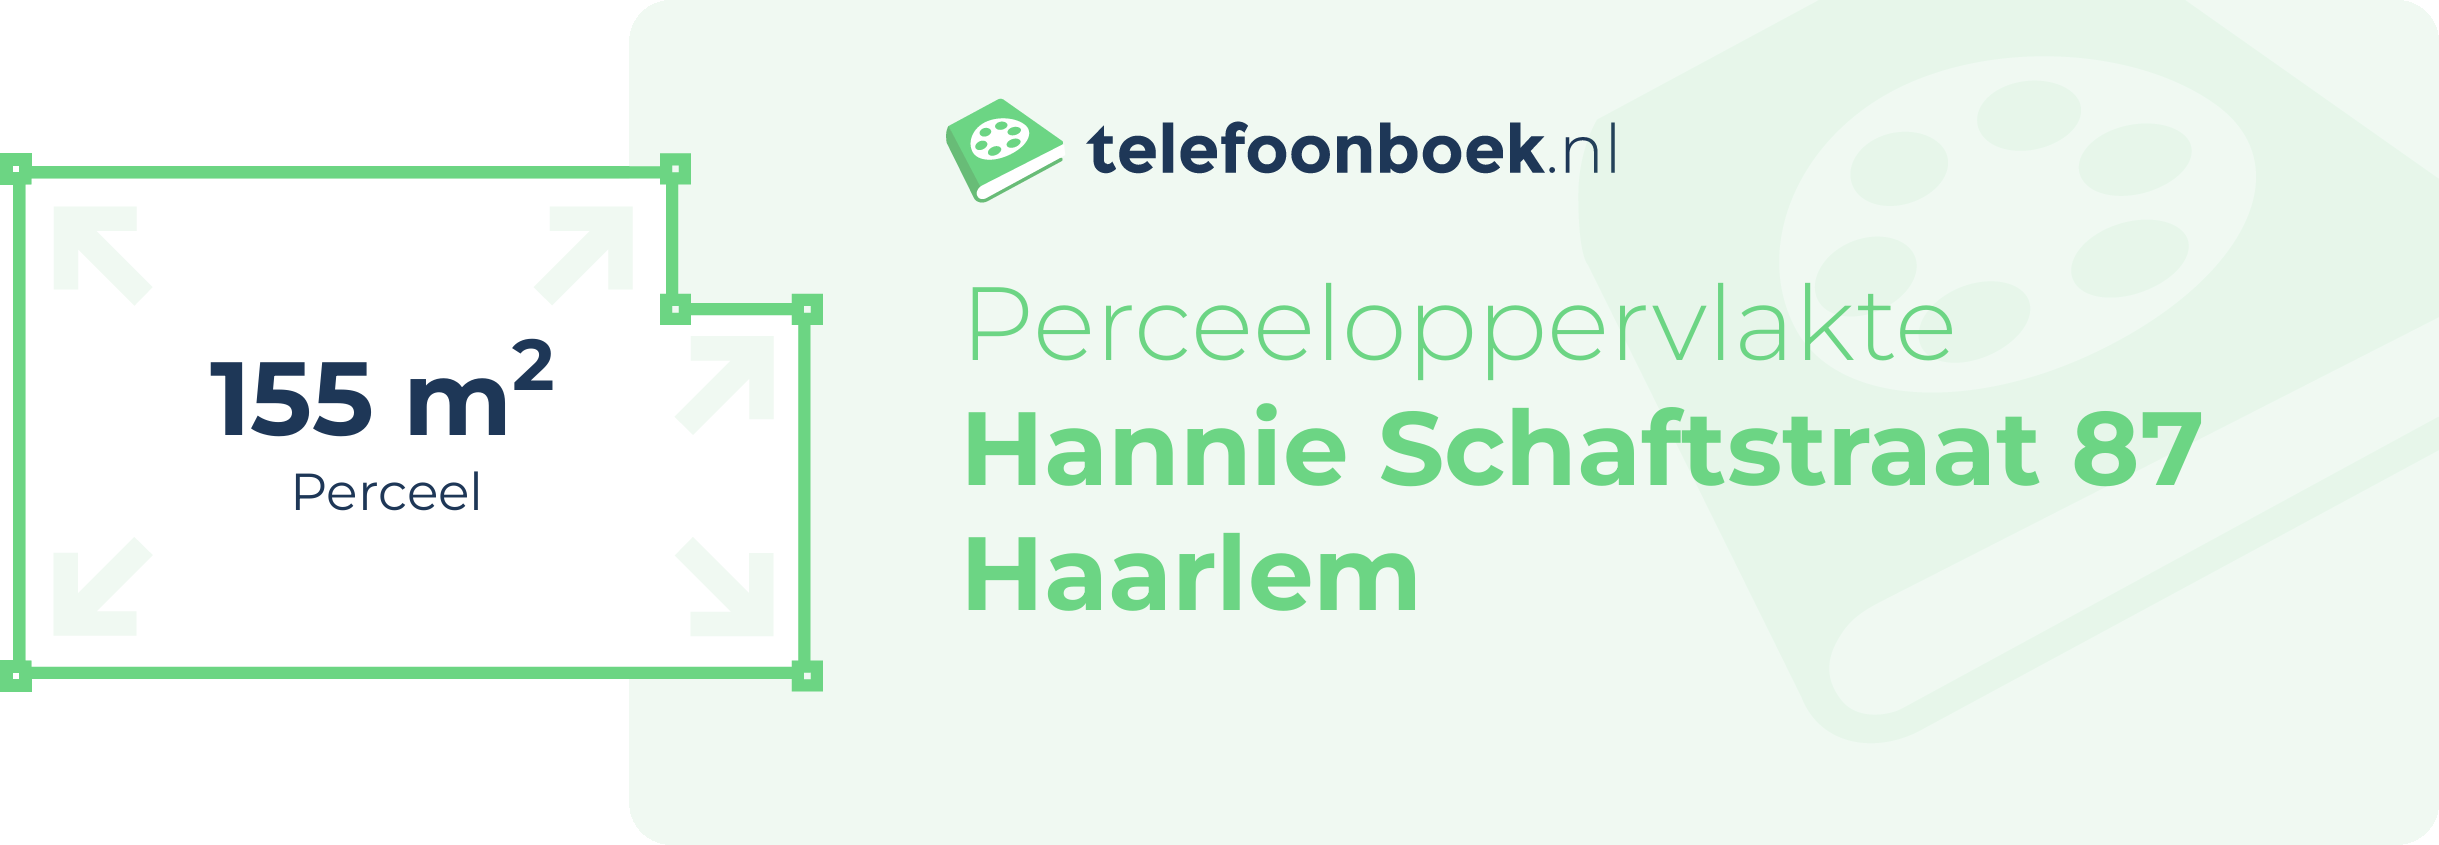 Perceeloppervlakte Hannie Schaftstraat 87 Haarlem